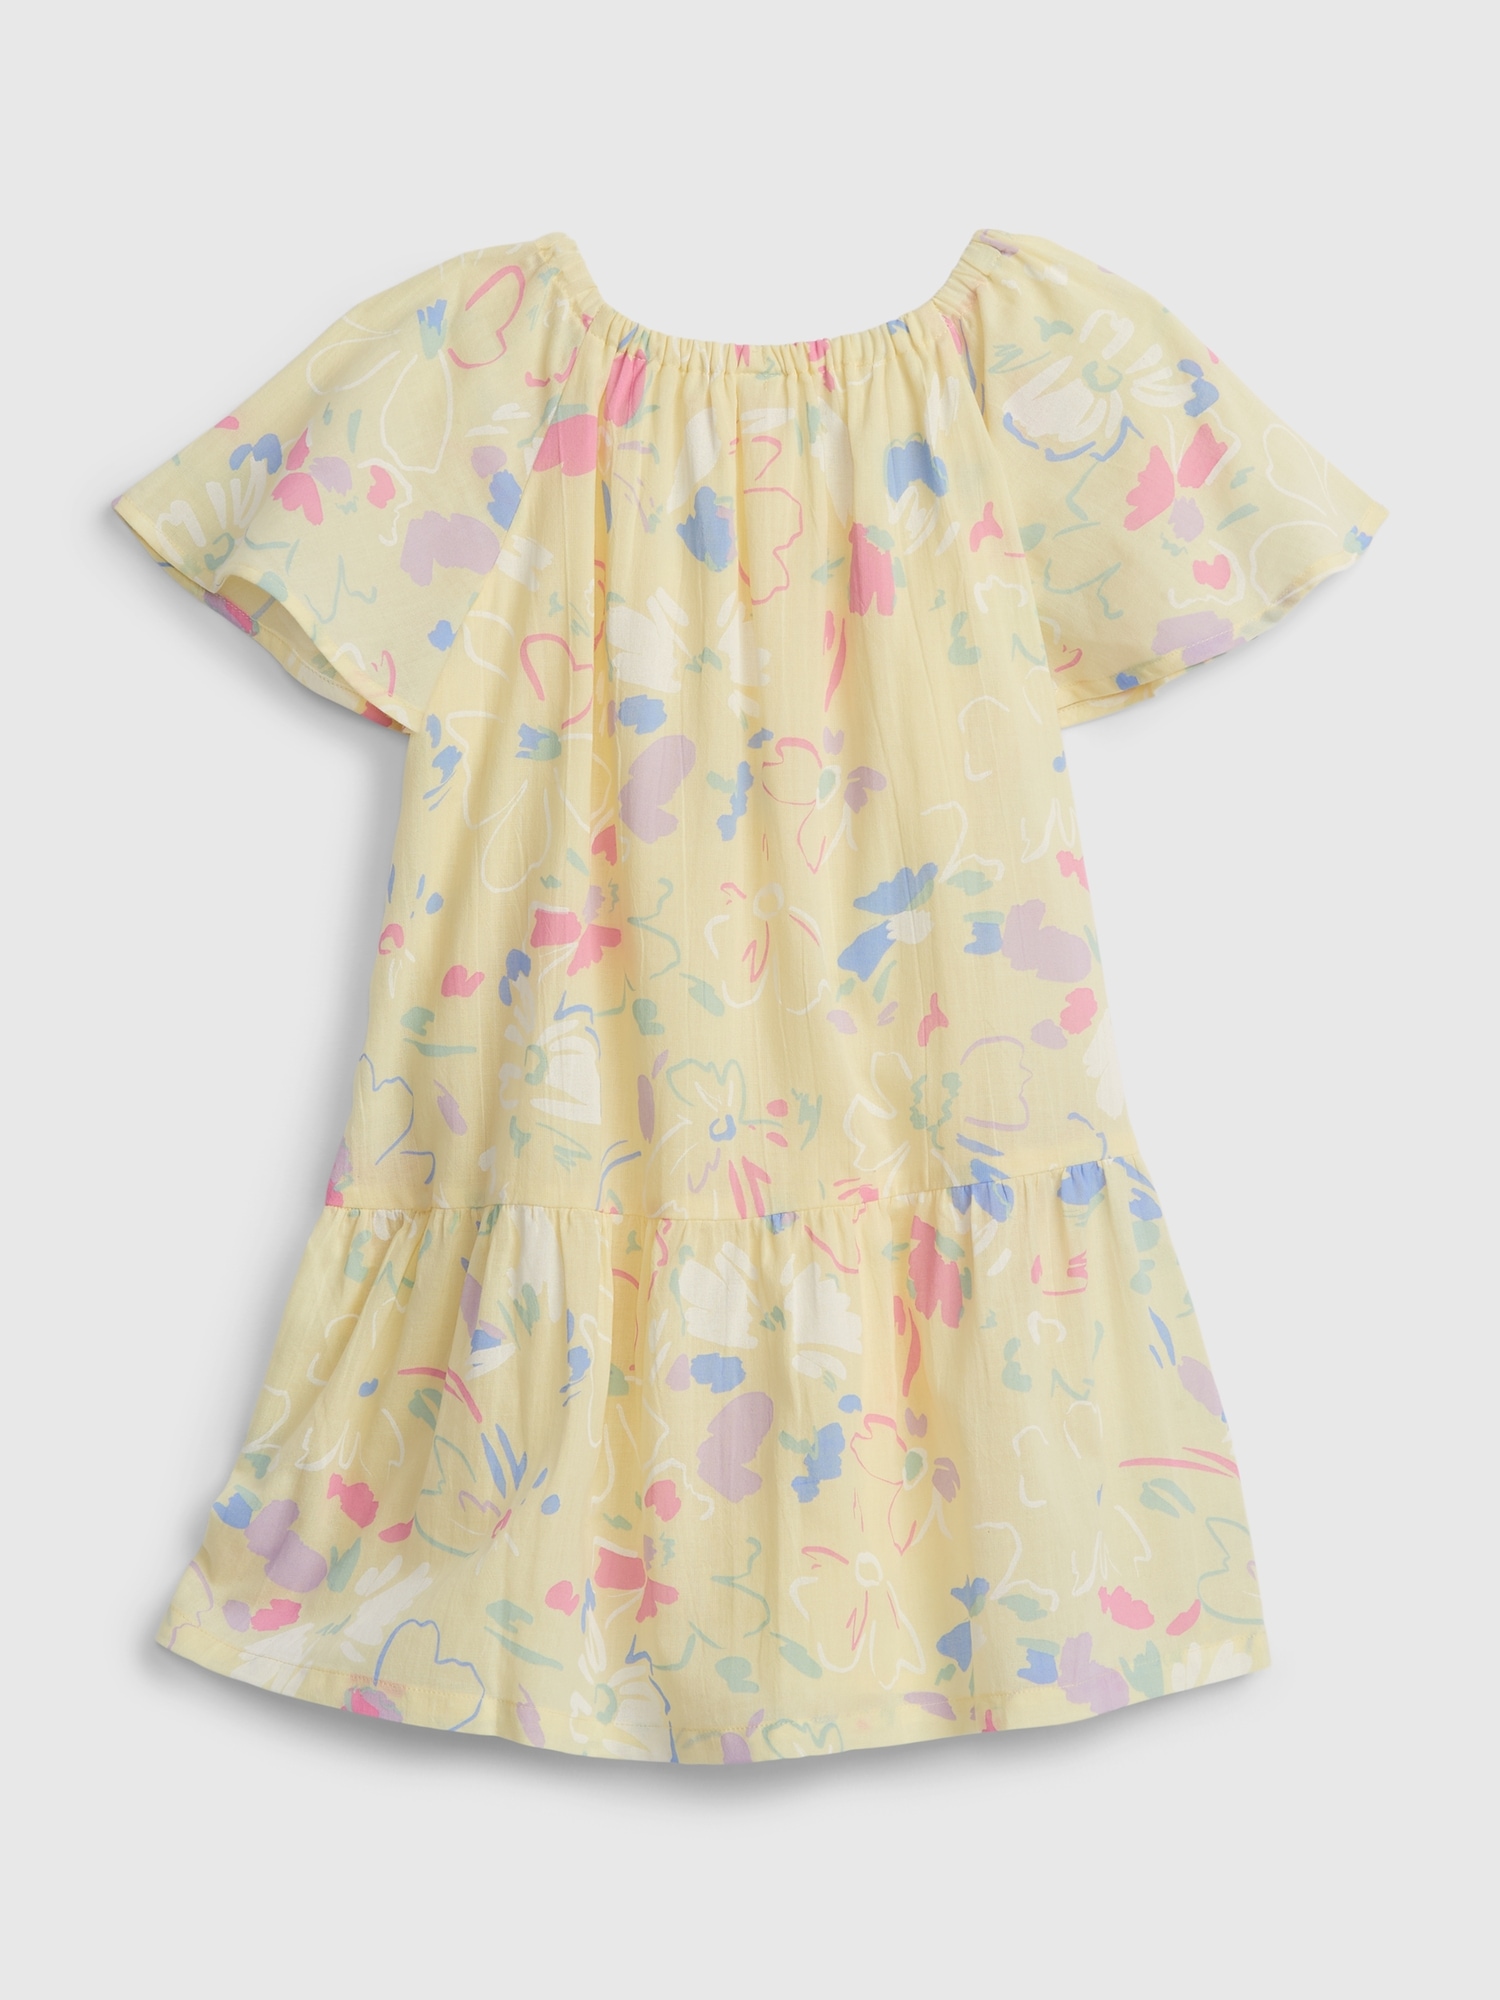 Toddler Floral Ruffle Dress | Gap